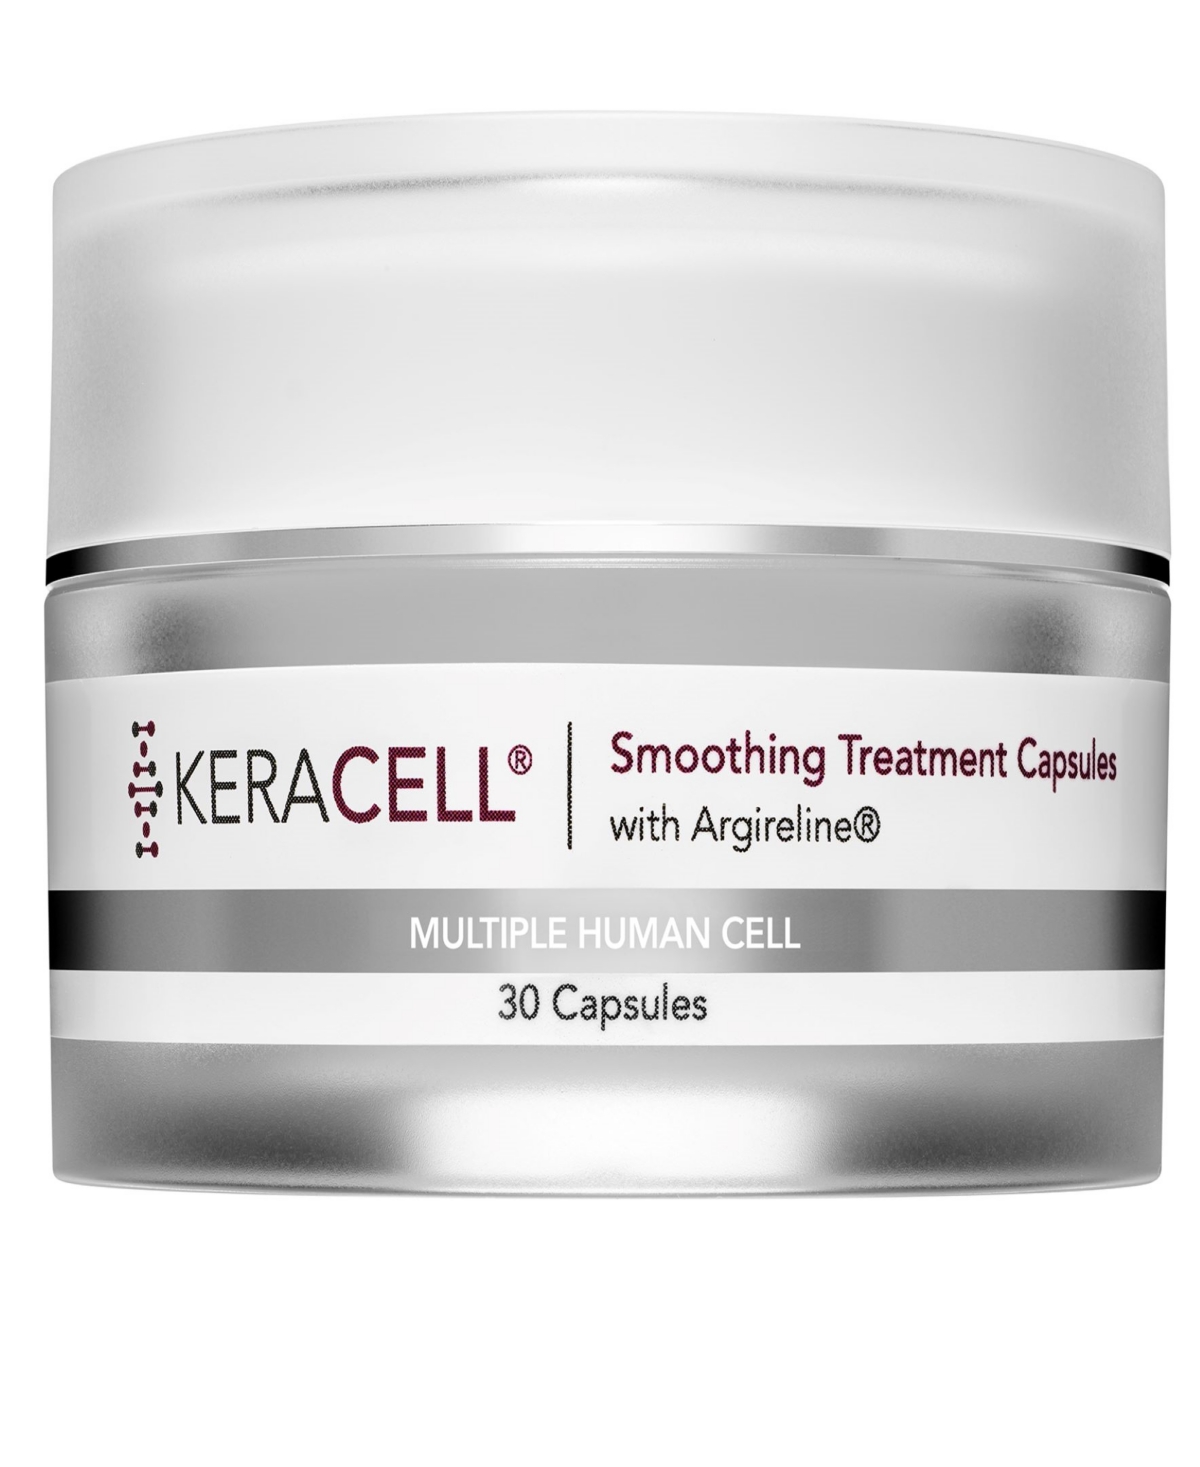 Keracell Smoothing Treatment Capsules with Argireline, 30 Capsules